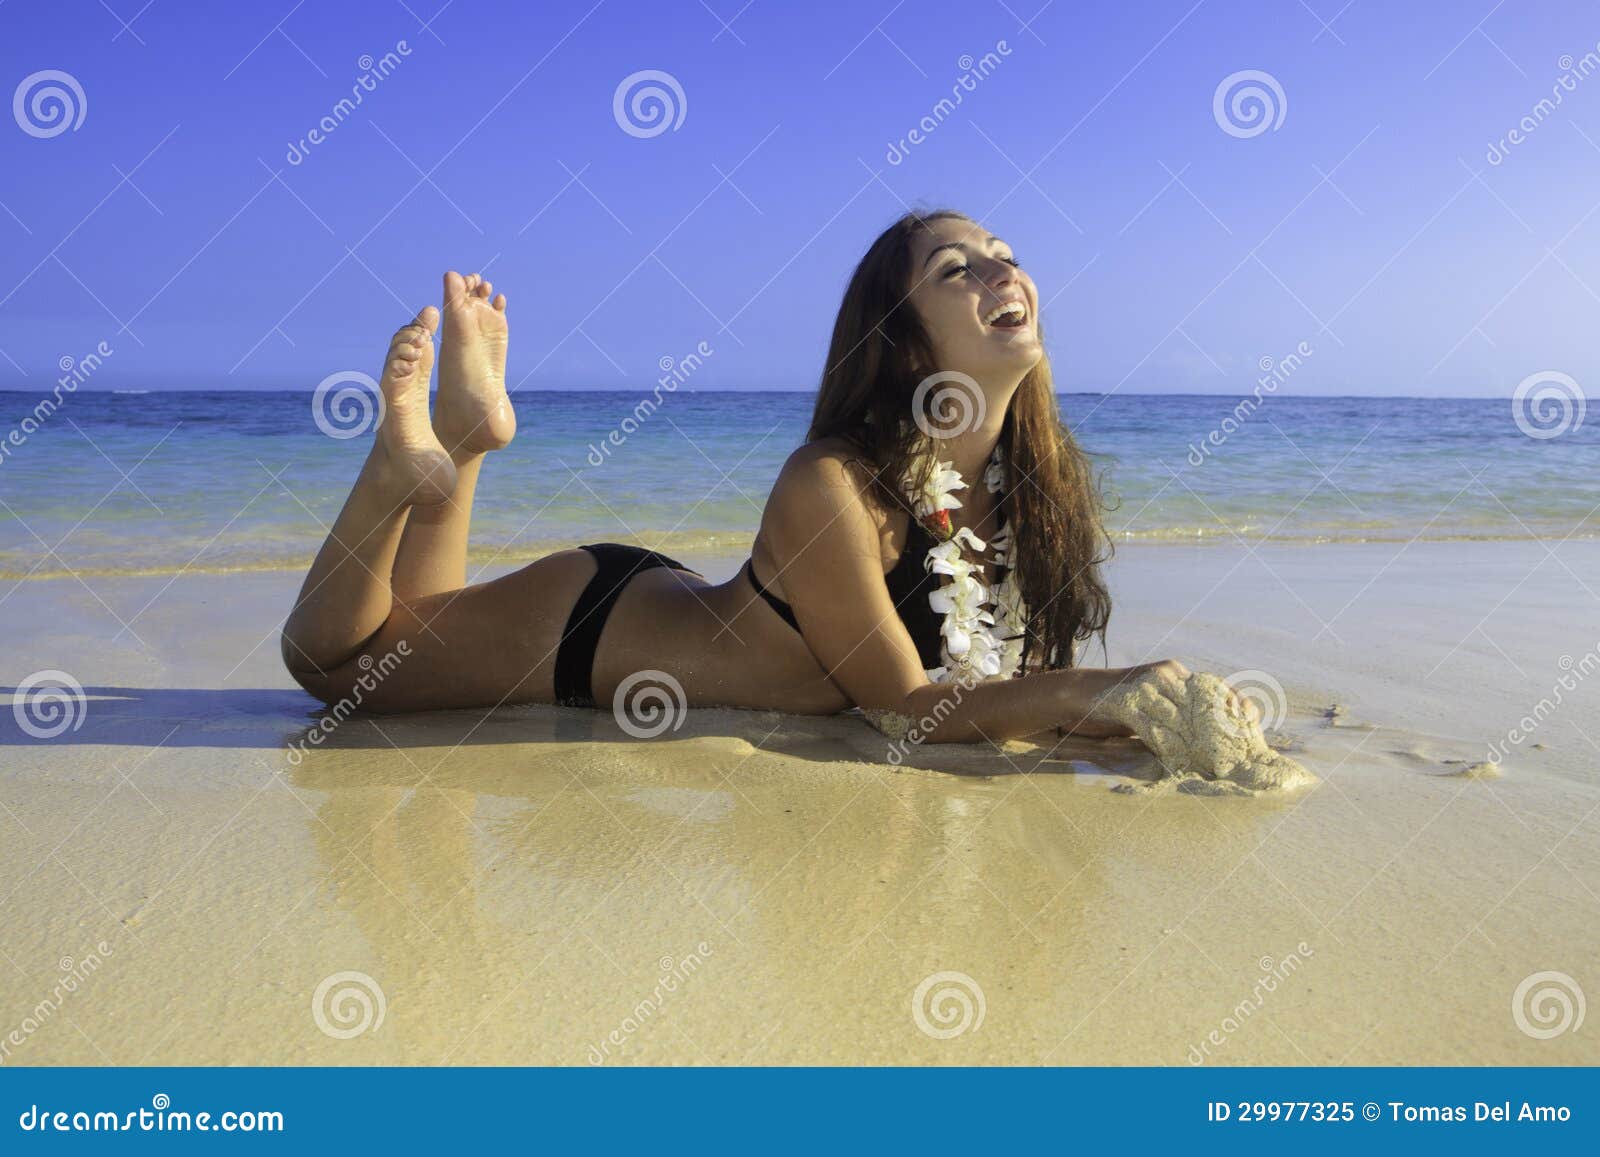 Outdoor shot of smiling young female model girl in bikini lying